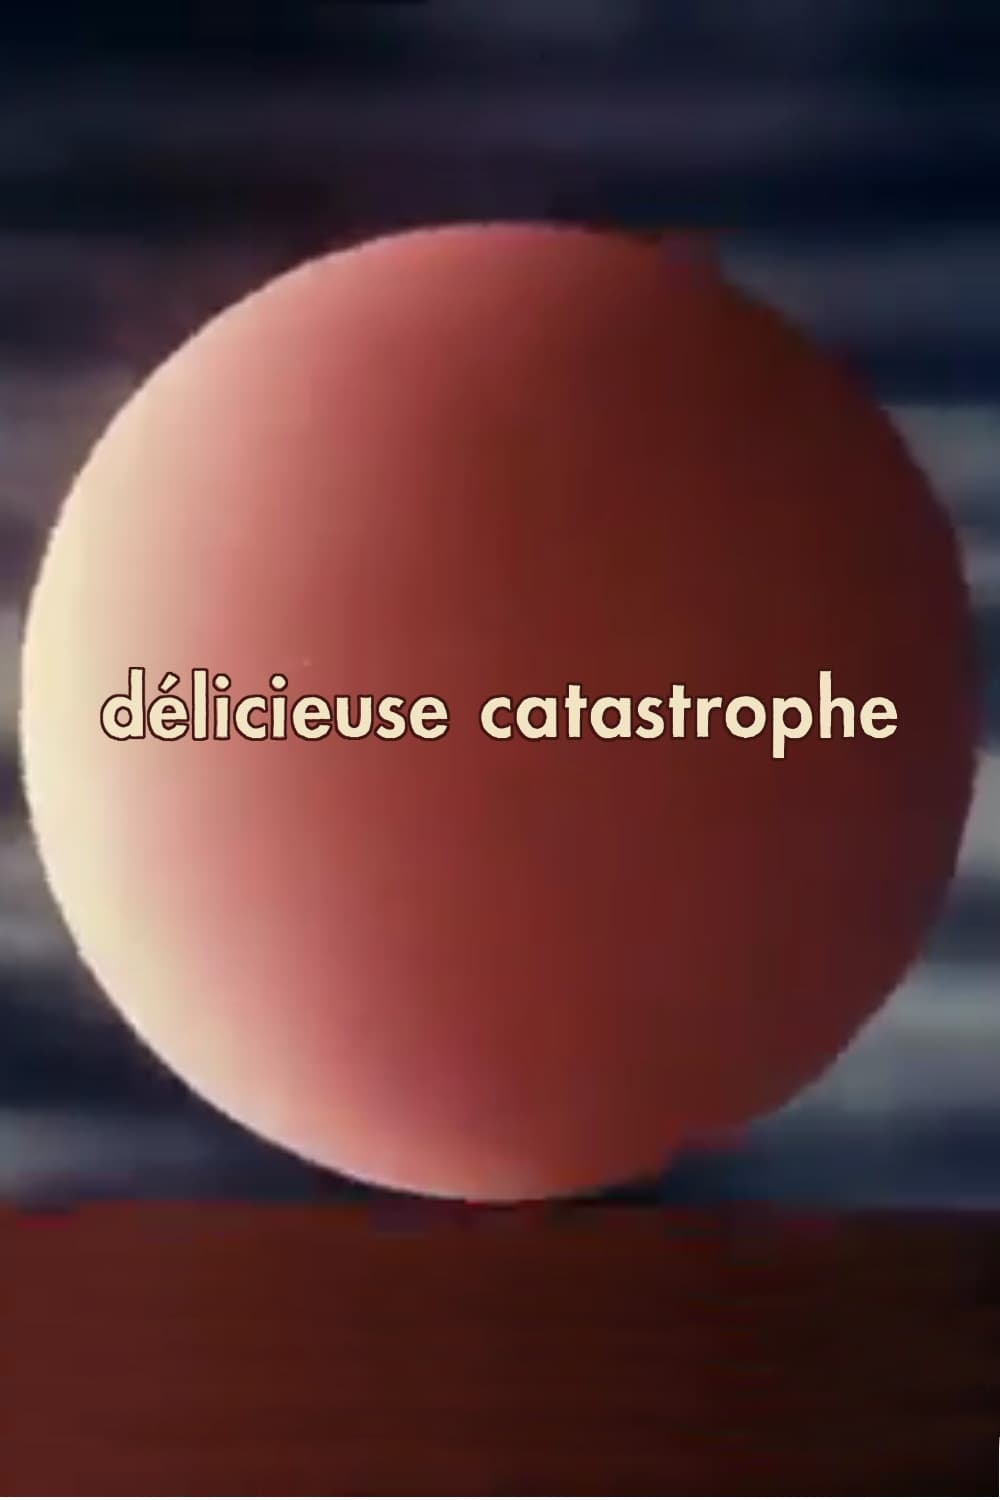 Delicious Catastrophe